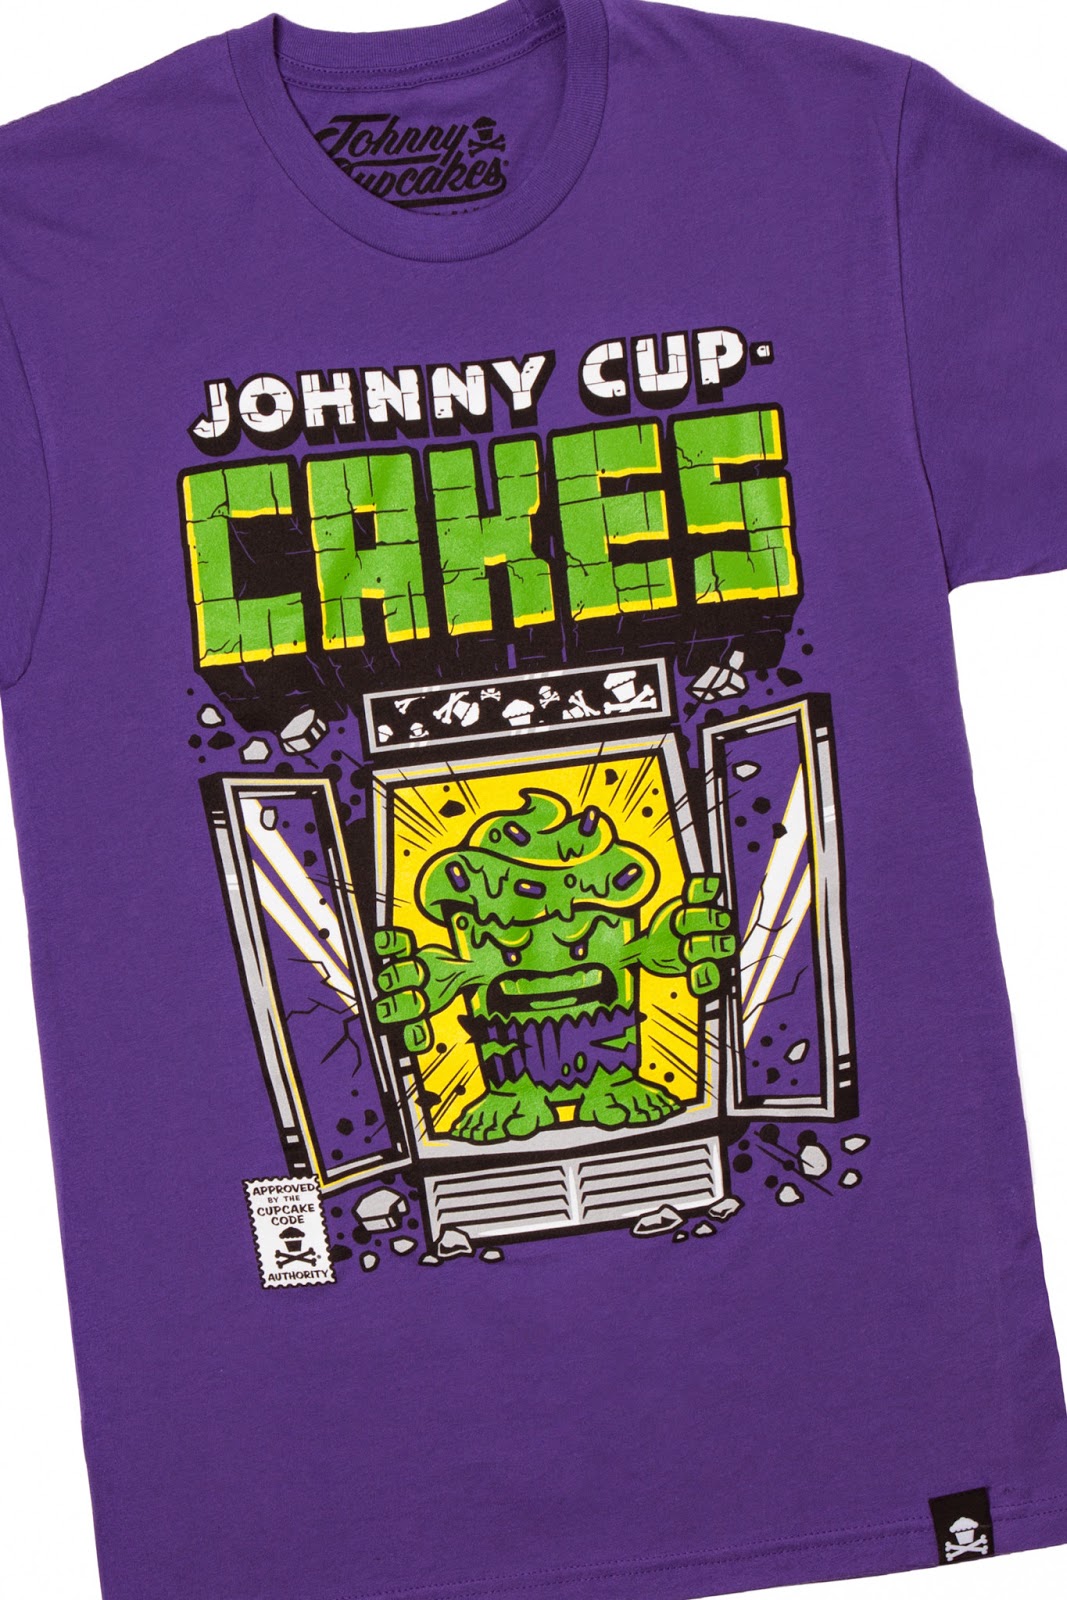 Johnny Cupcakes  x The Incredible Hulk “Cake Smash” T-Shirt